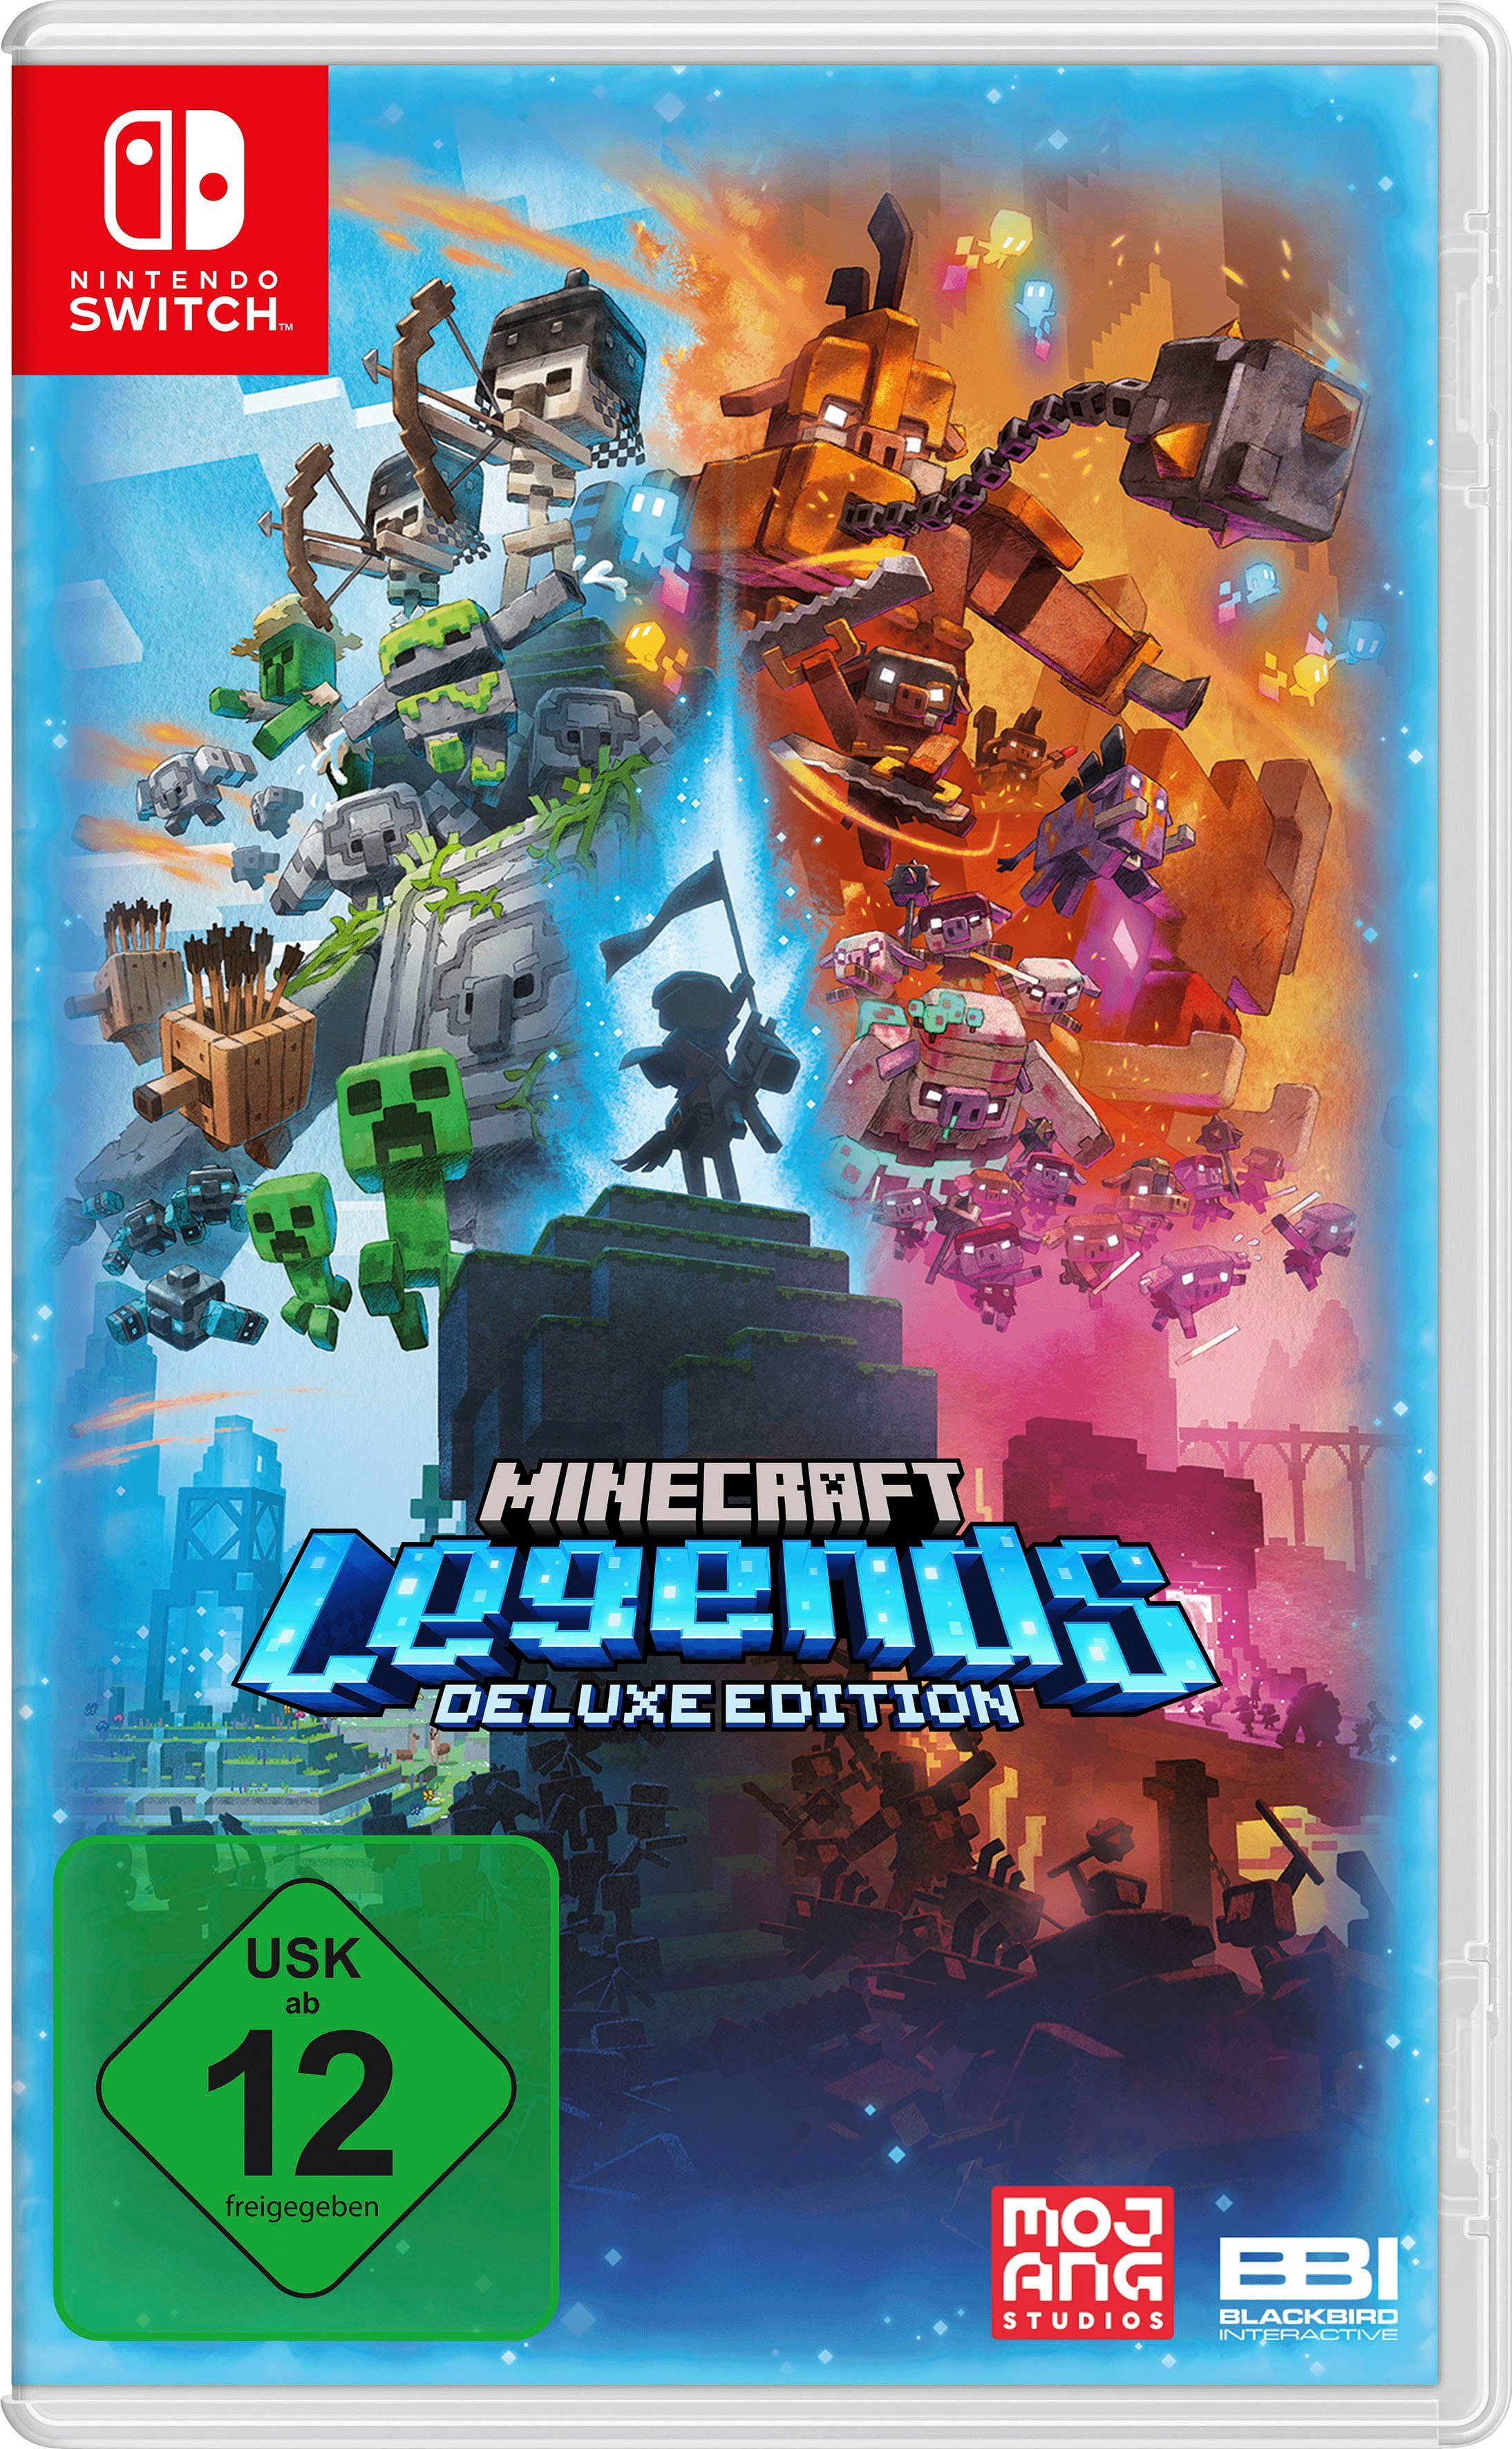 Switch Legends Edition Deluxe Nintendo Minecraft